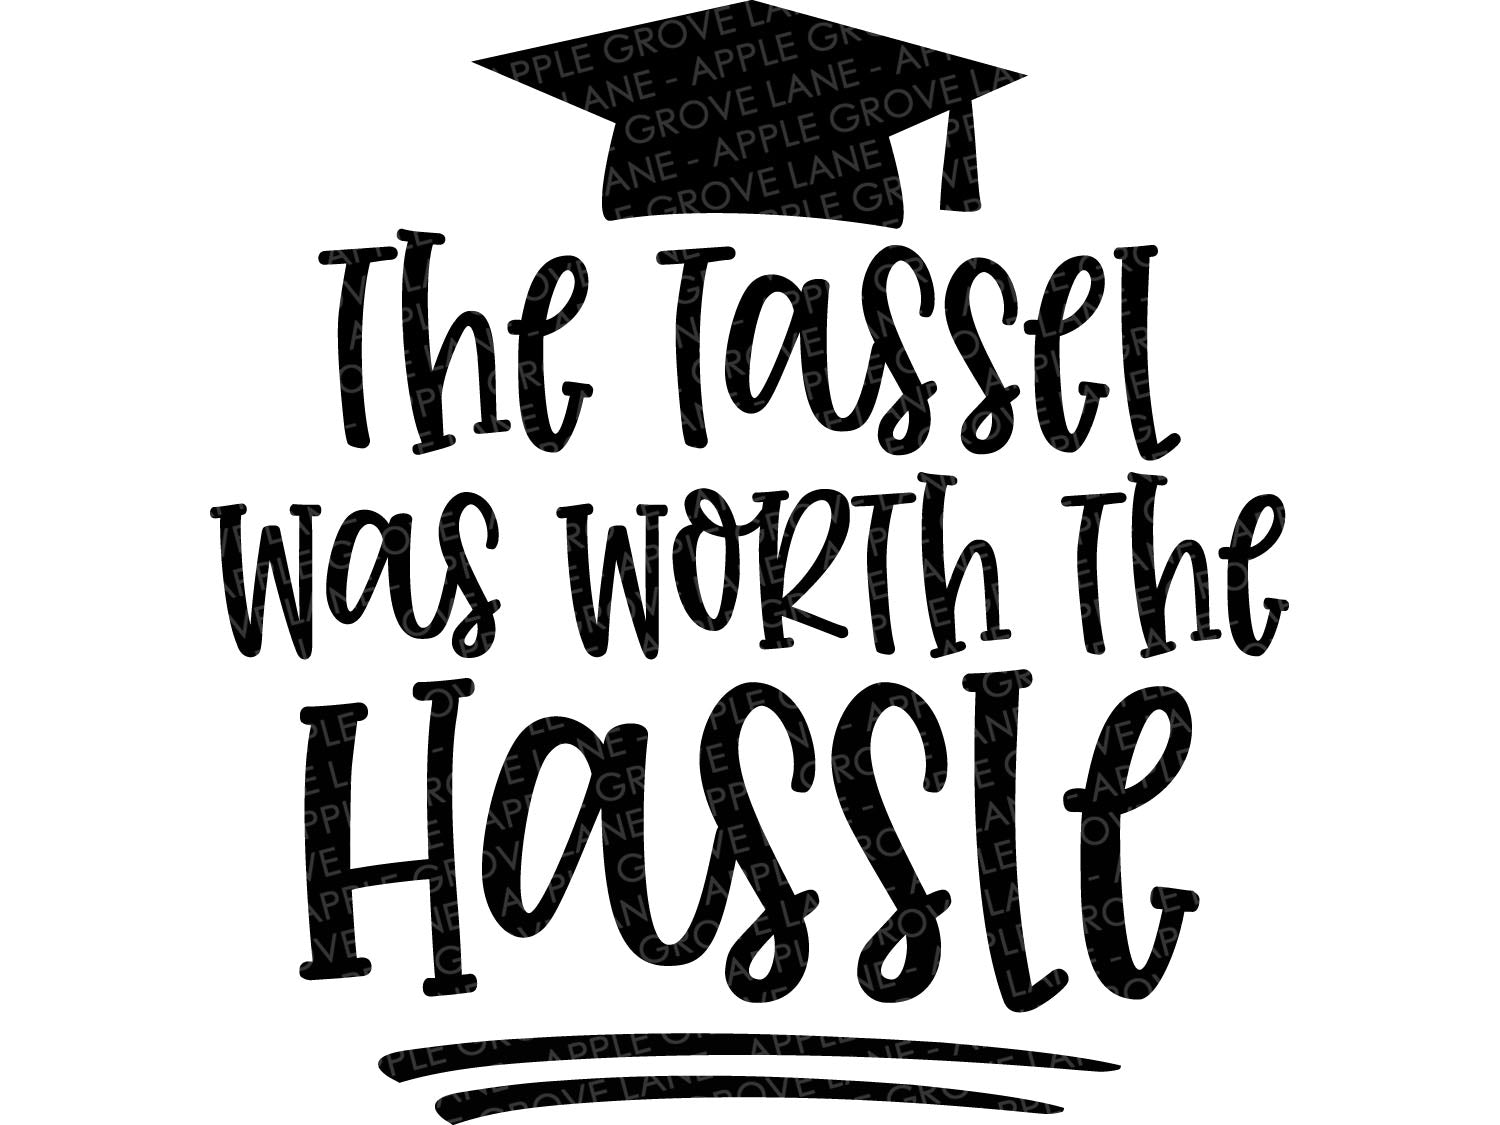 Download Tassel Worth Hassle Svg Class Of 2021 Svg Graduation Svg 2021 Sv Apple Grove Lane